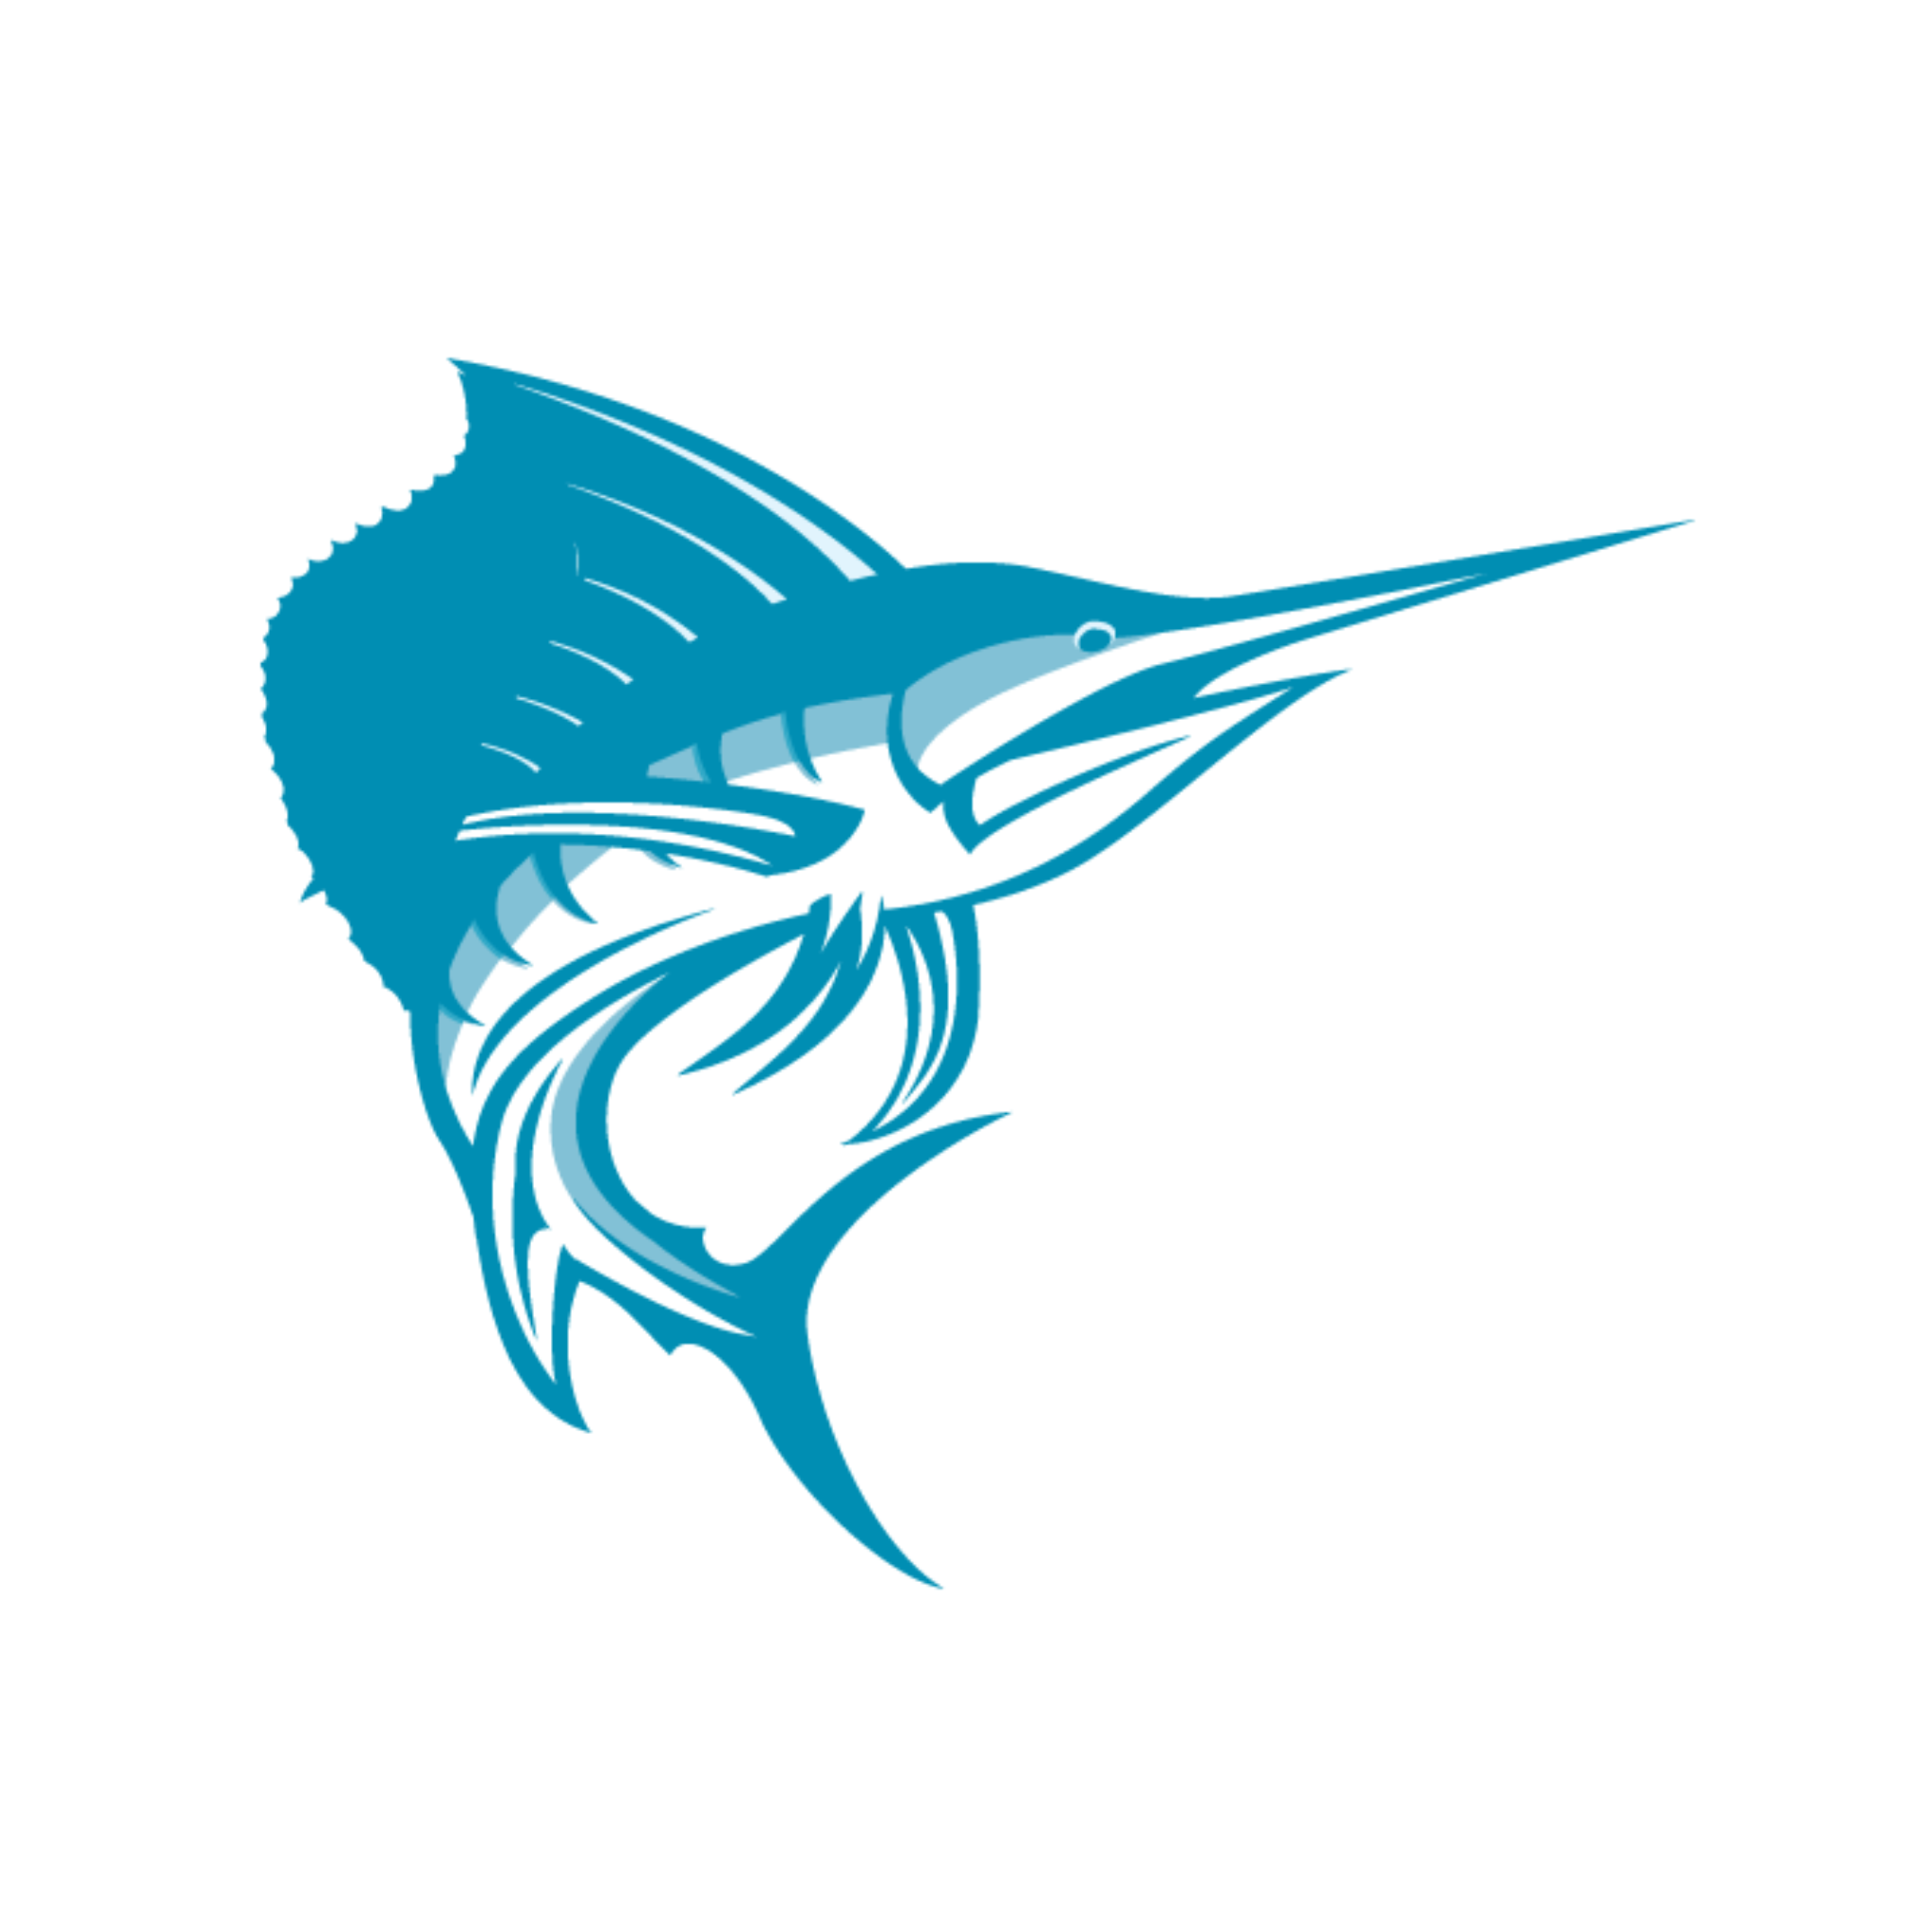 Cartoon image of a swordfish